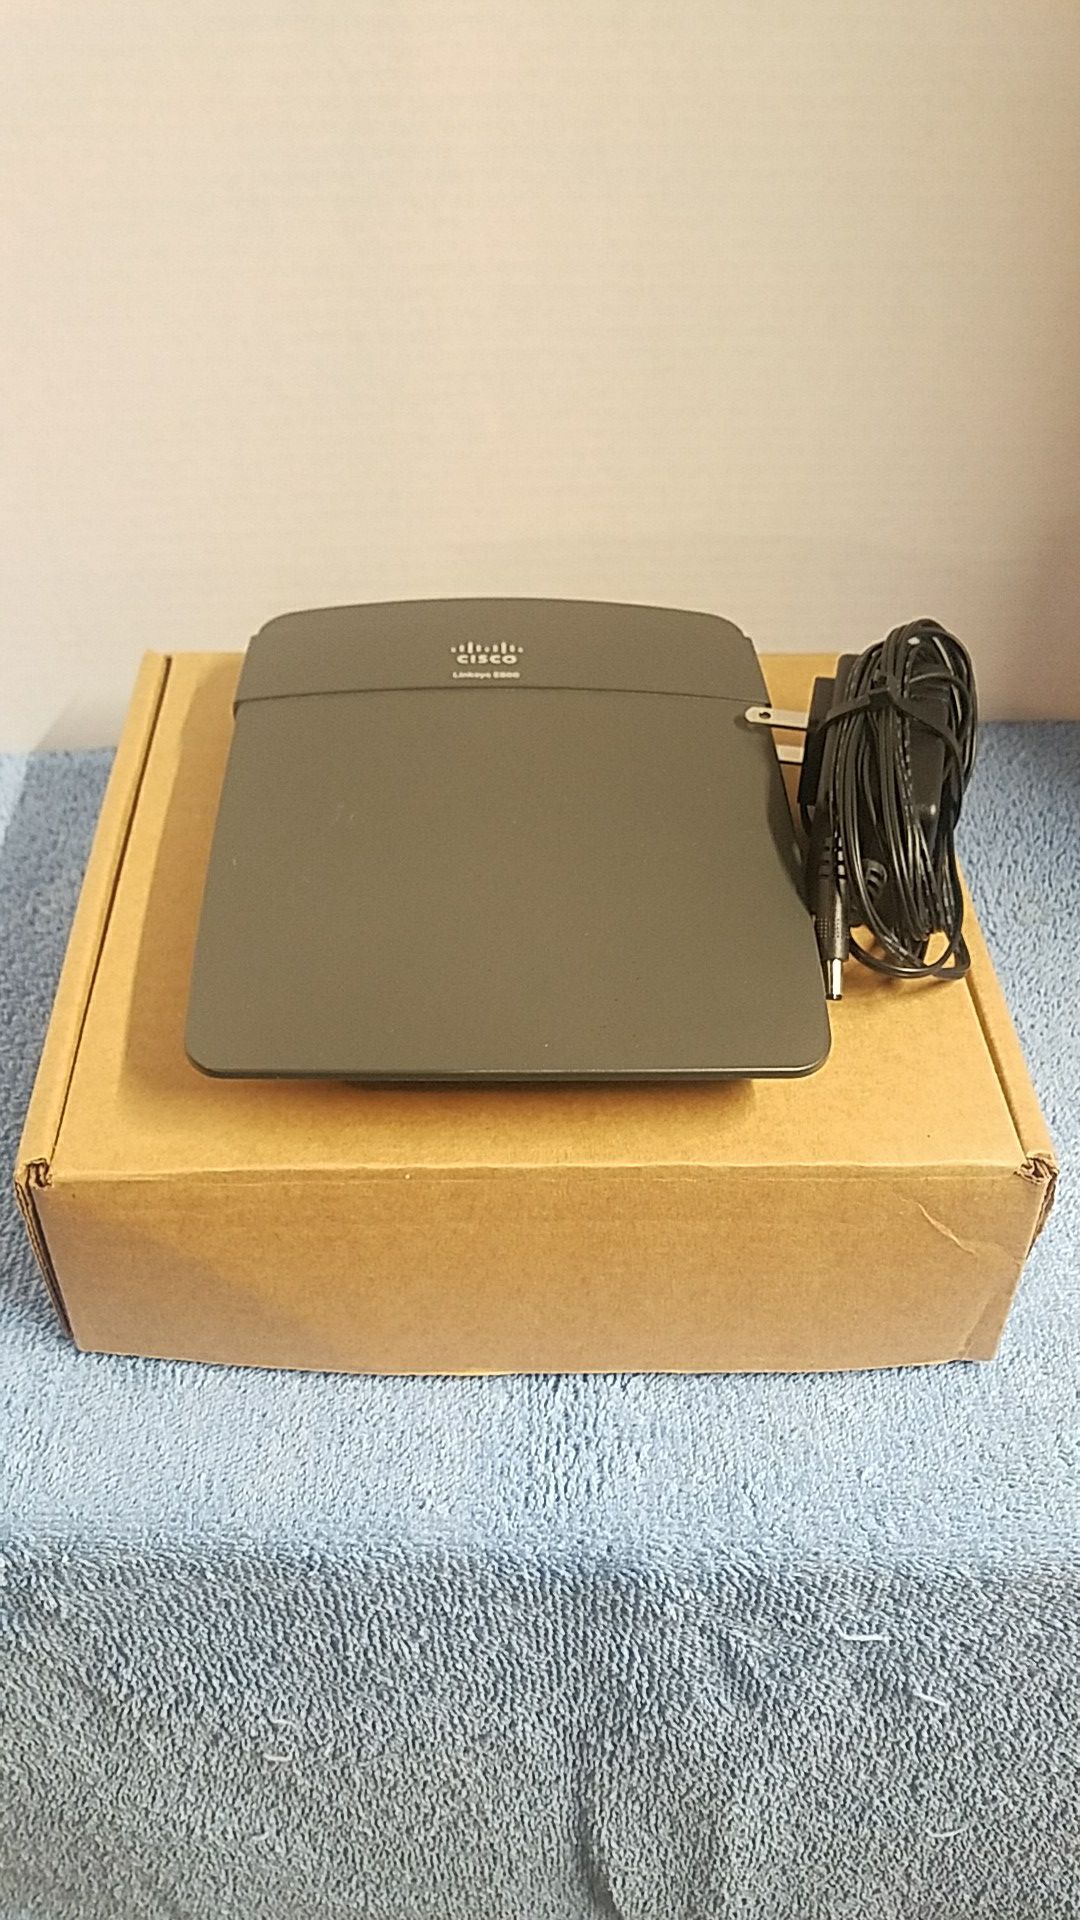 Cisco linksys e800 wi-fi router